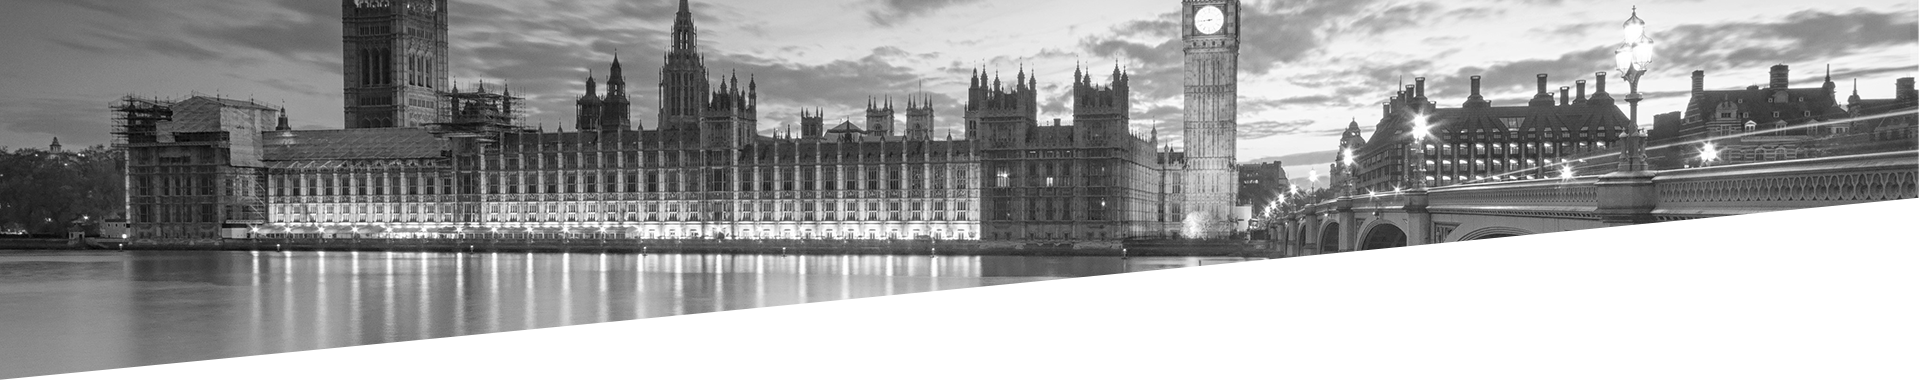 Parliament and big ben, London | Seven Compliance